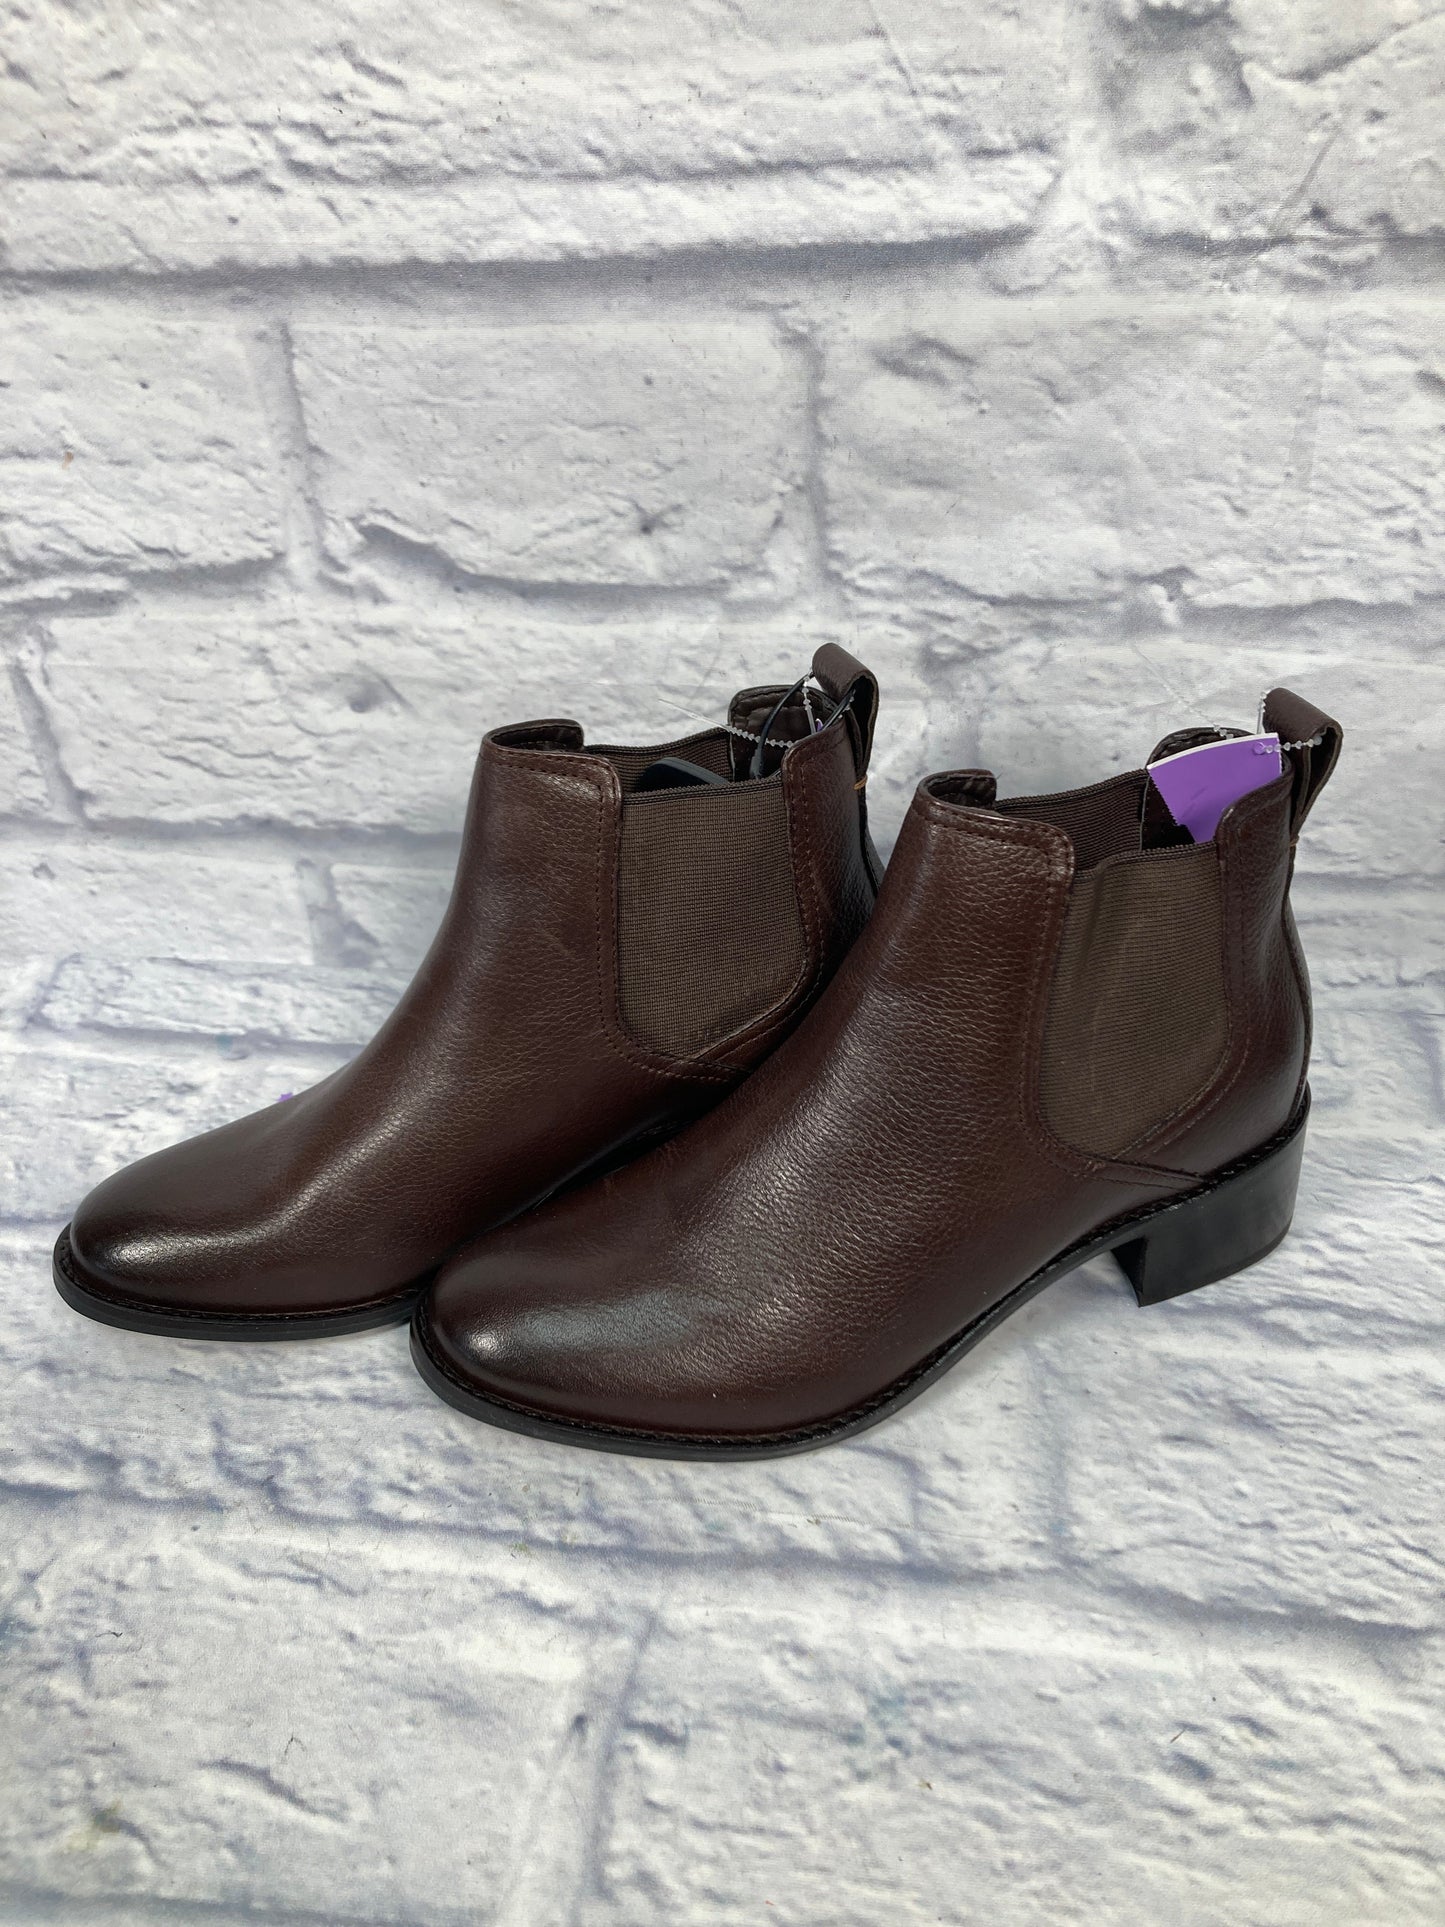 Brown Boots Designer Cole-haan, Size 8